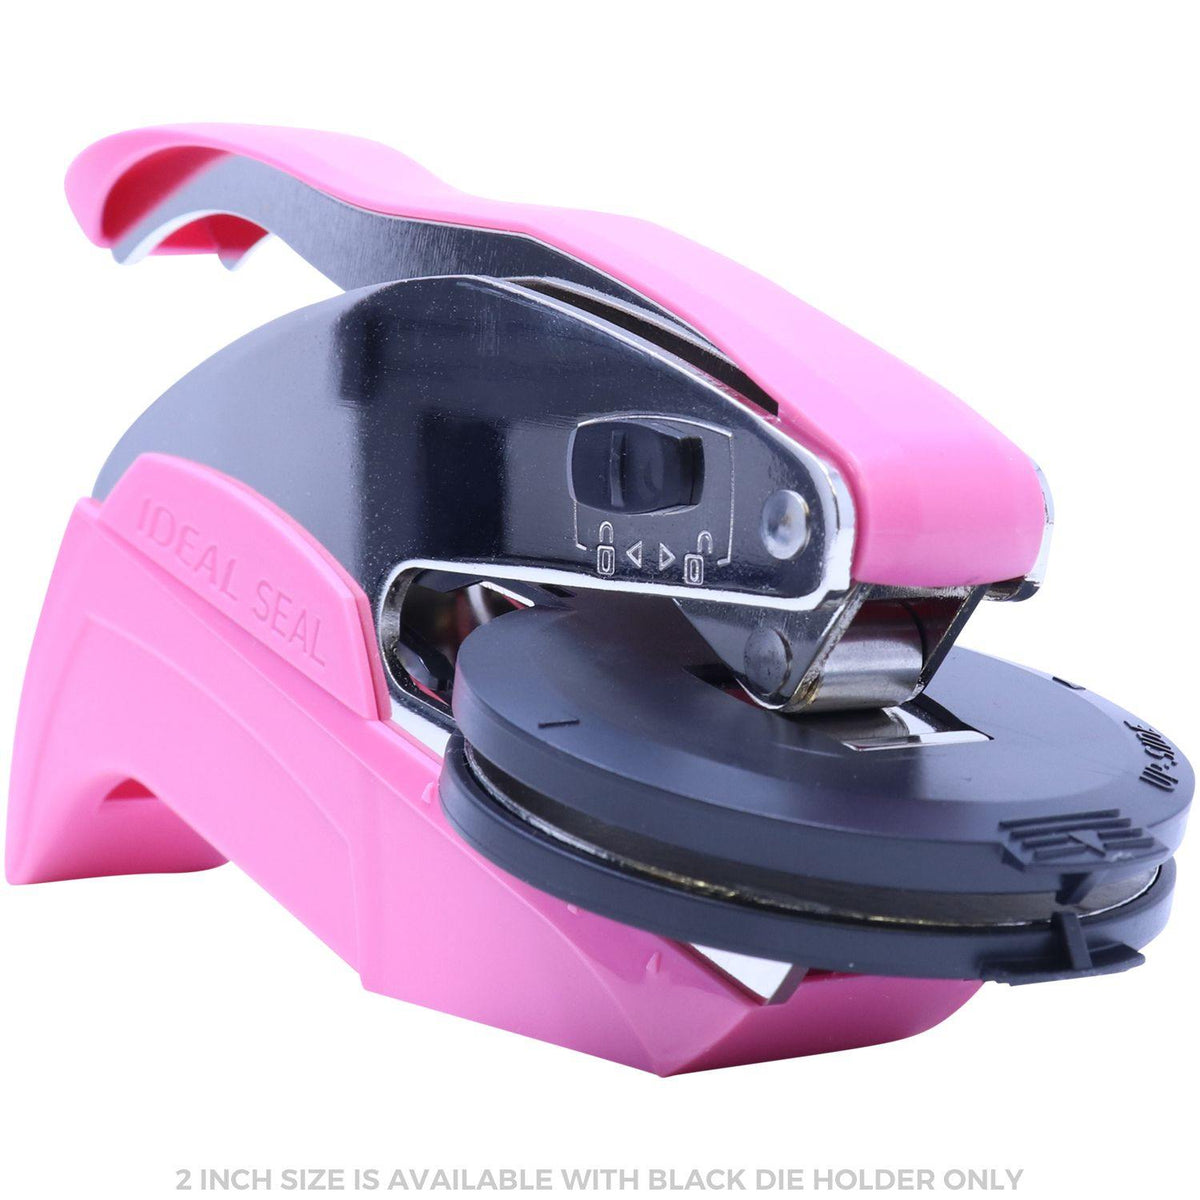 Real Estate Appraiser Pink Hybrid Handheld Embosser - Engineer Seal Stamps - Embosser Type_Handheld, Embosser Type_Hybrid, Type of Use_Professional